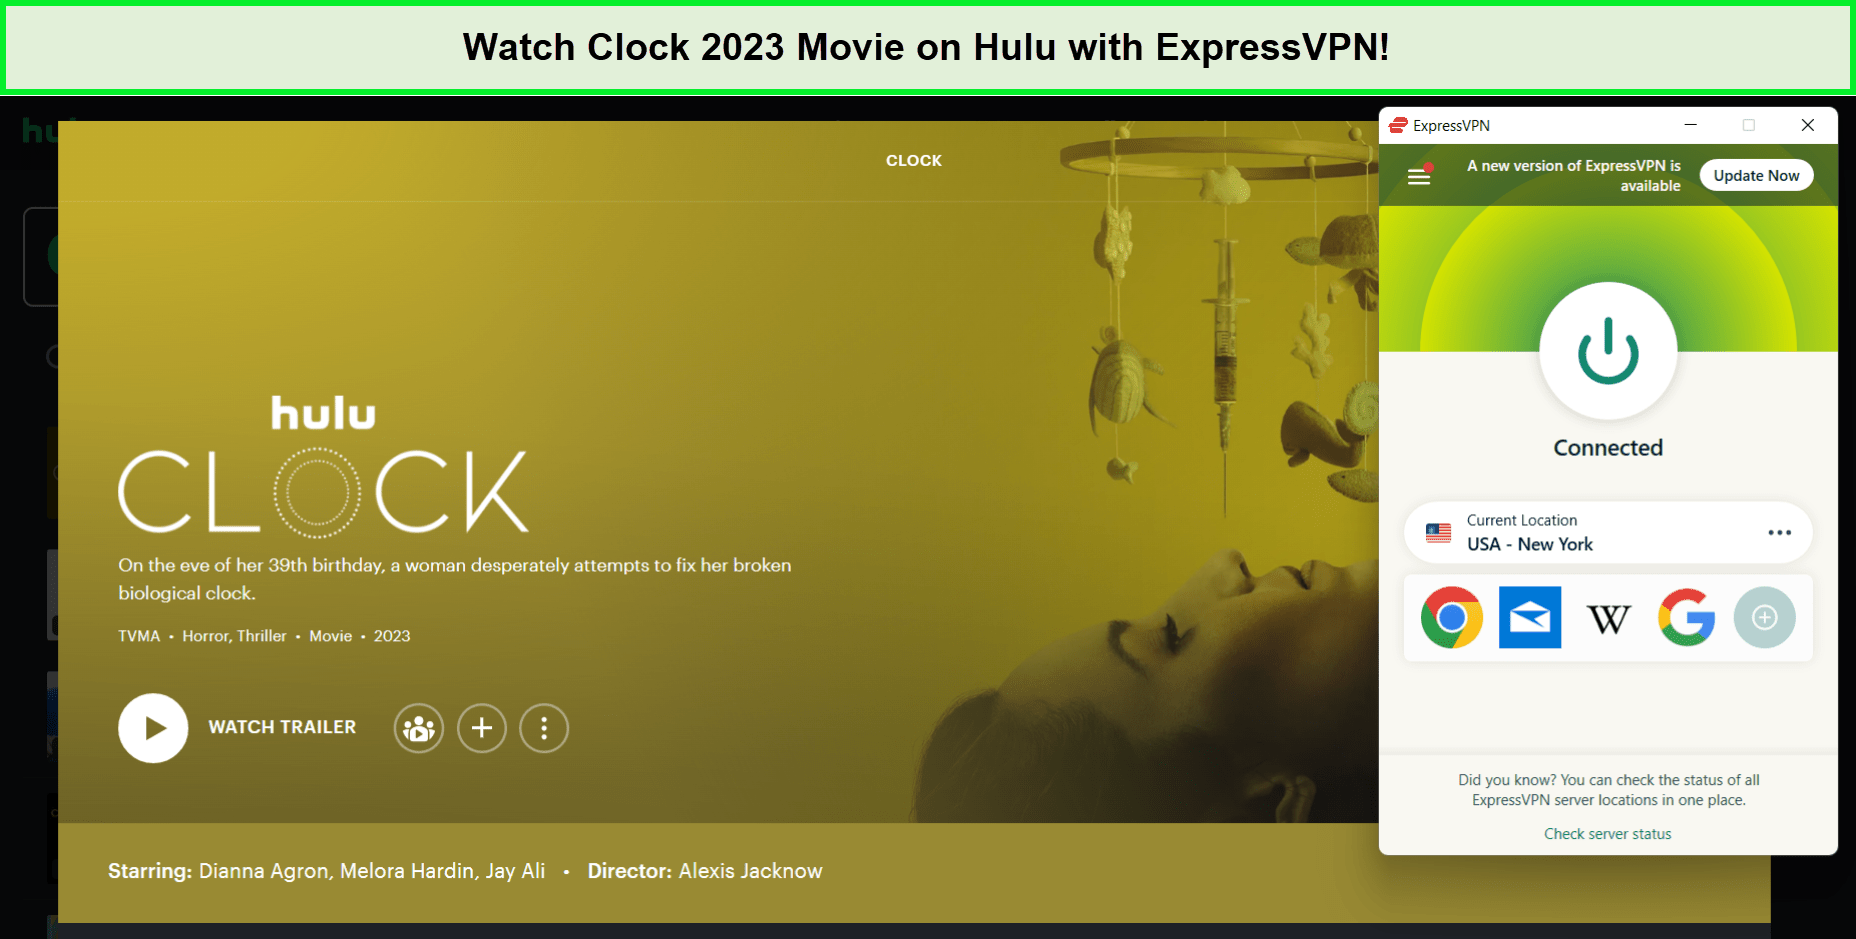 With-ExpressVPN-Watch-Clock-2023-Movie-on-Hulu-in-Singapore